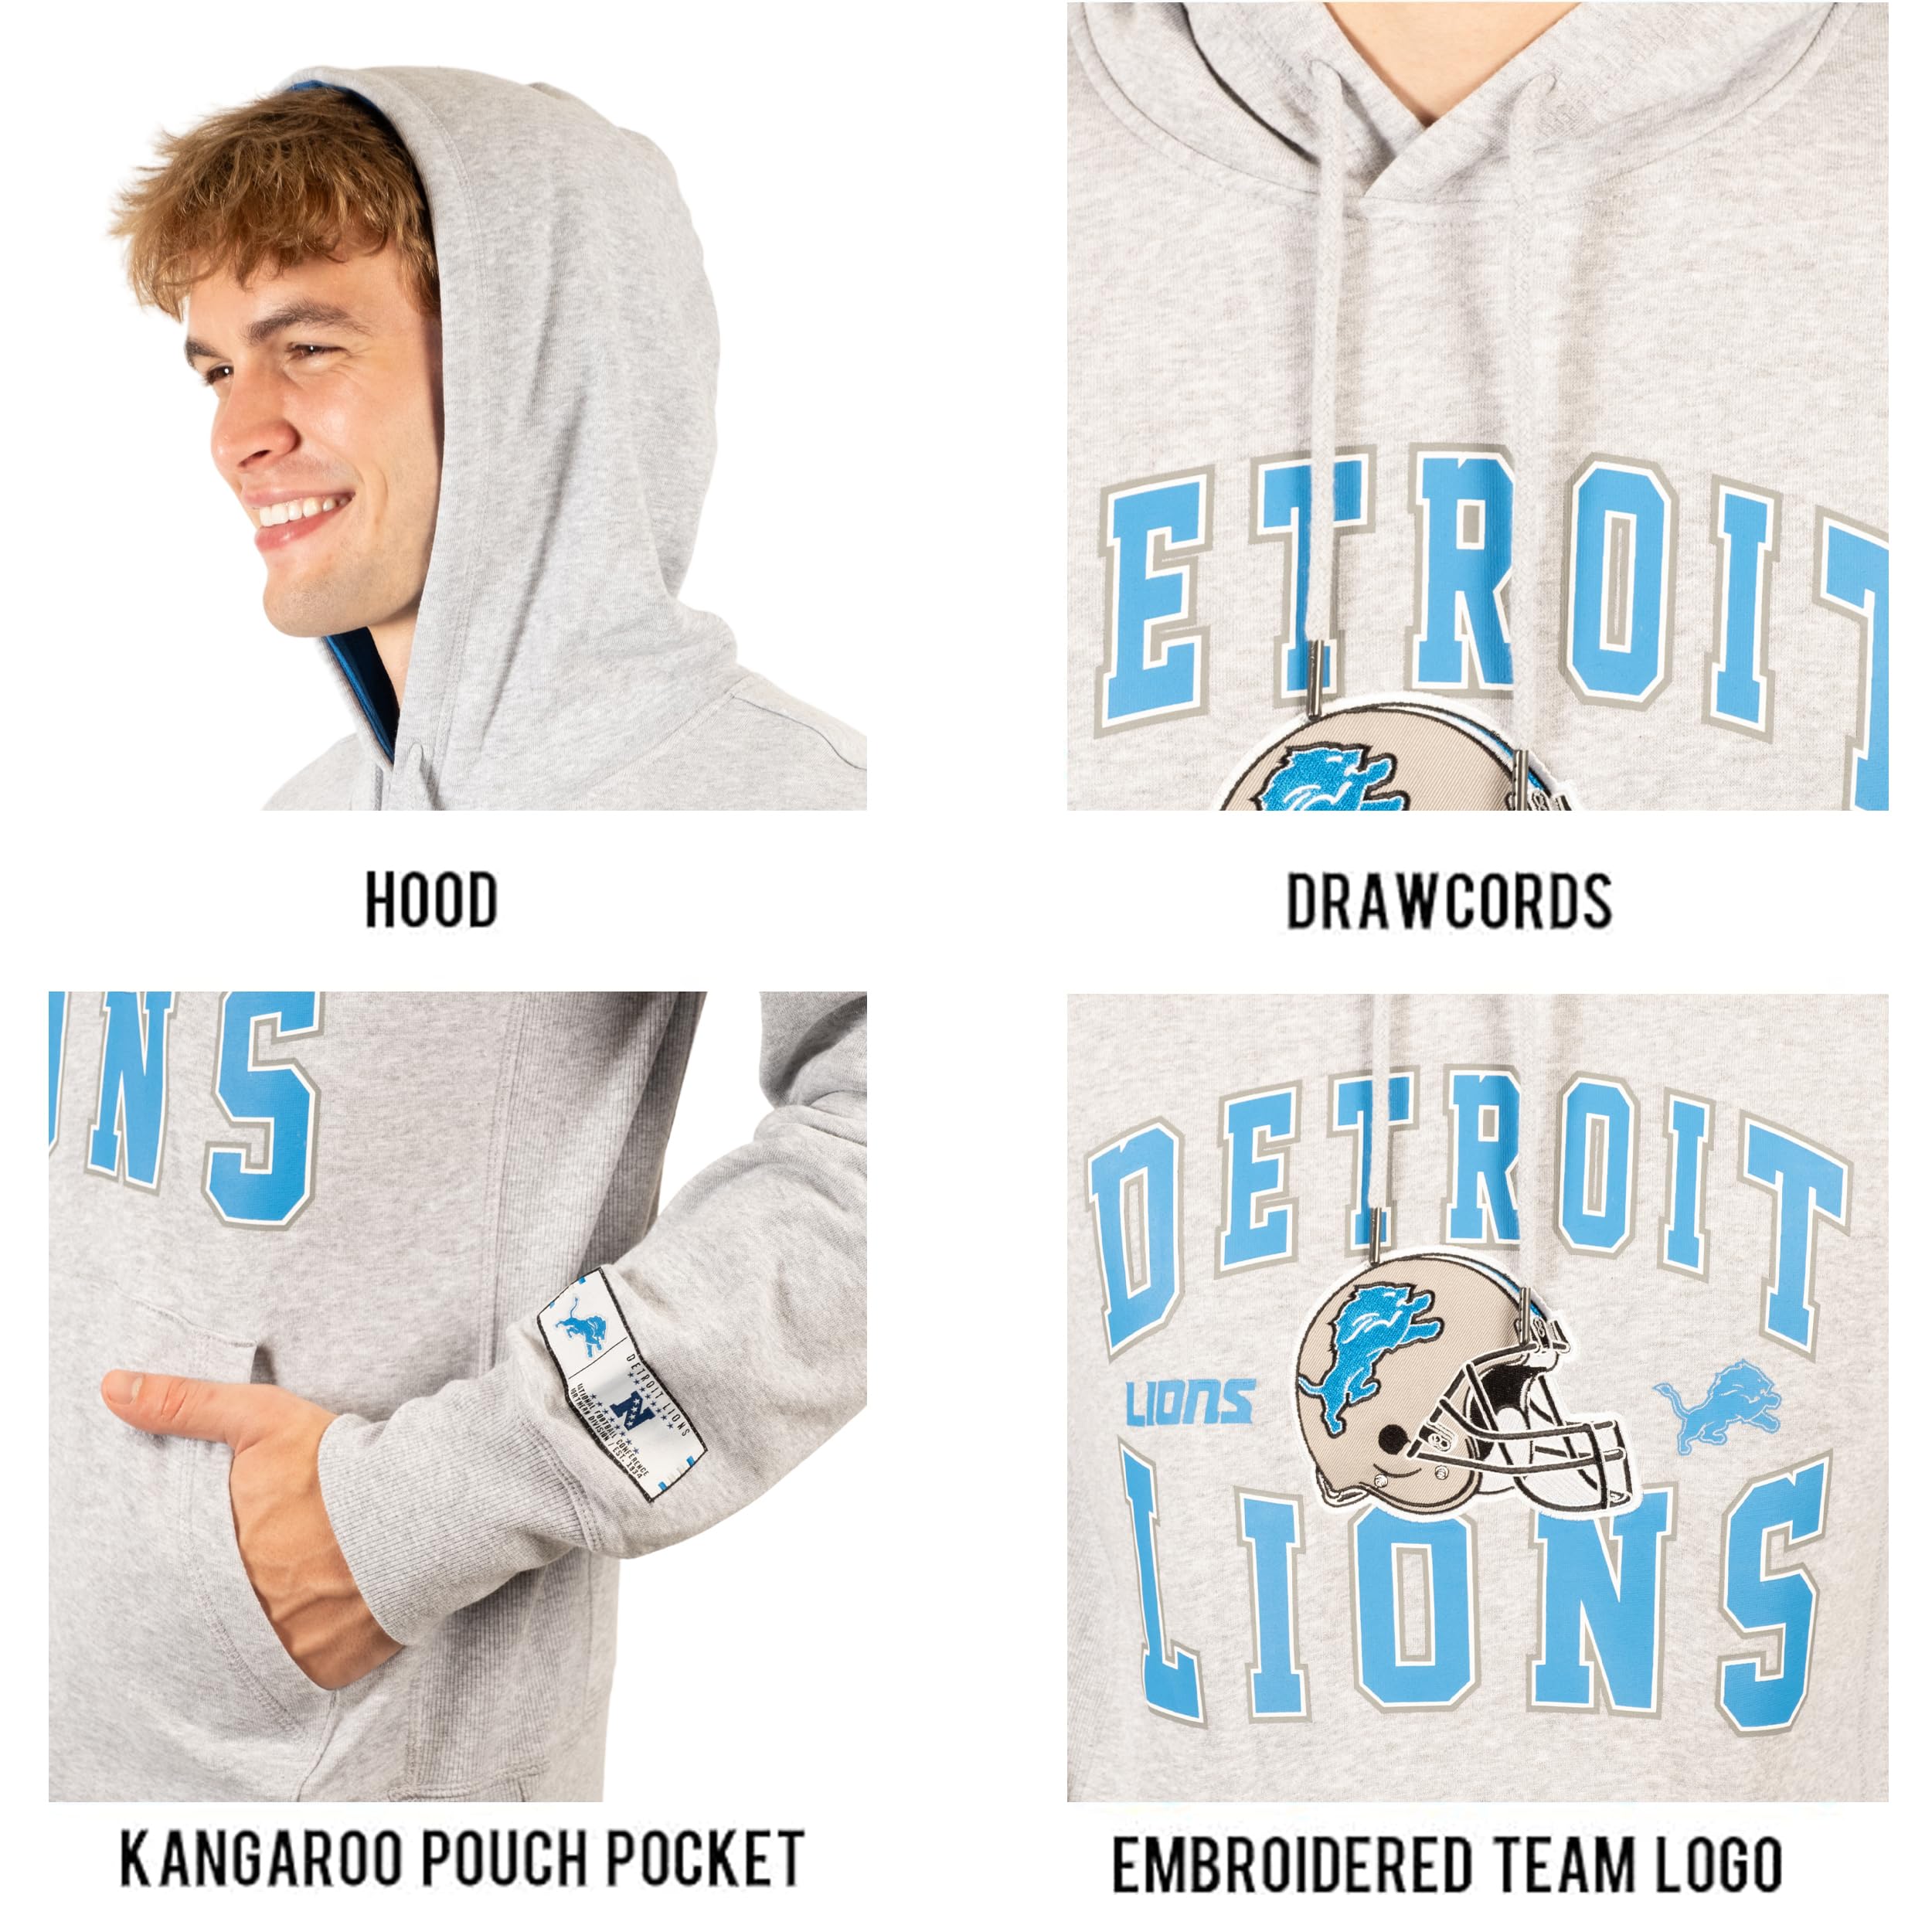 Ultra Game NFL Detroit Lions Mens Ultimate Quality Super Soft Hoodie Sweatshirt|Detroit Lions